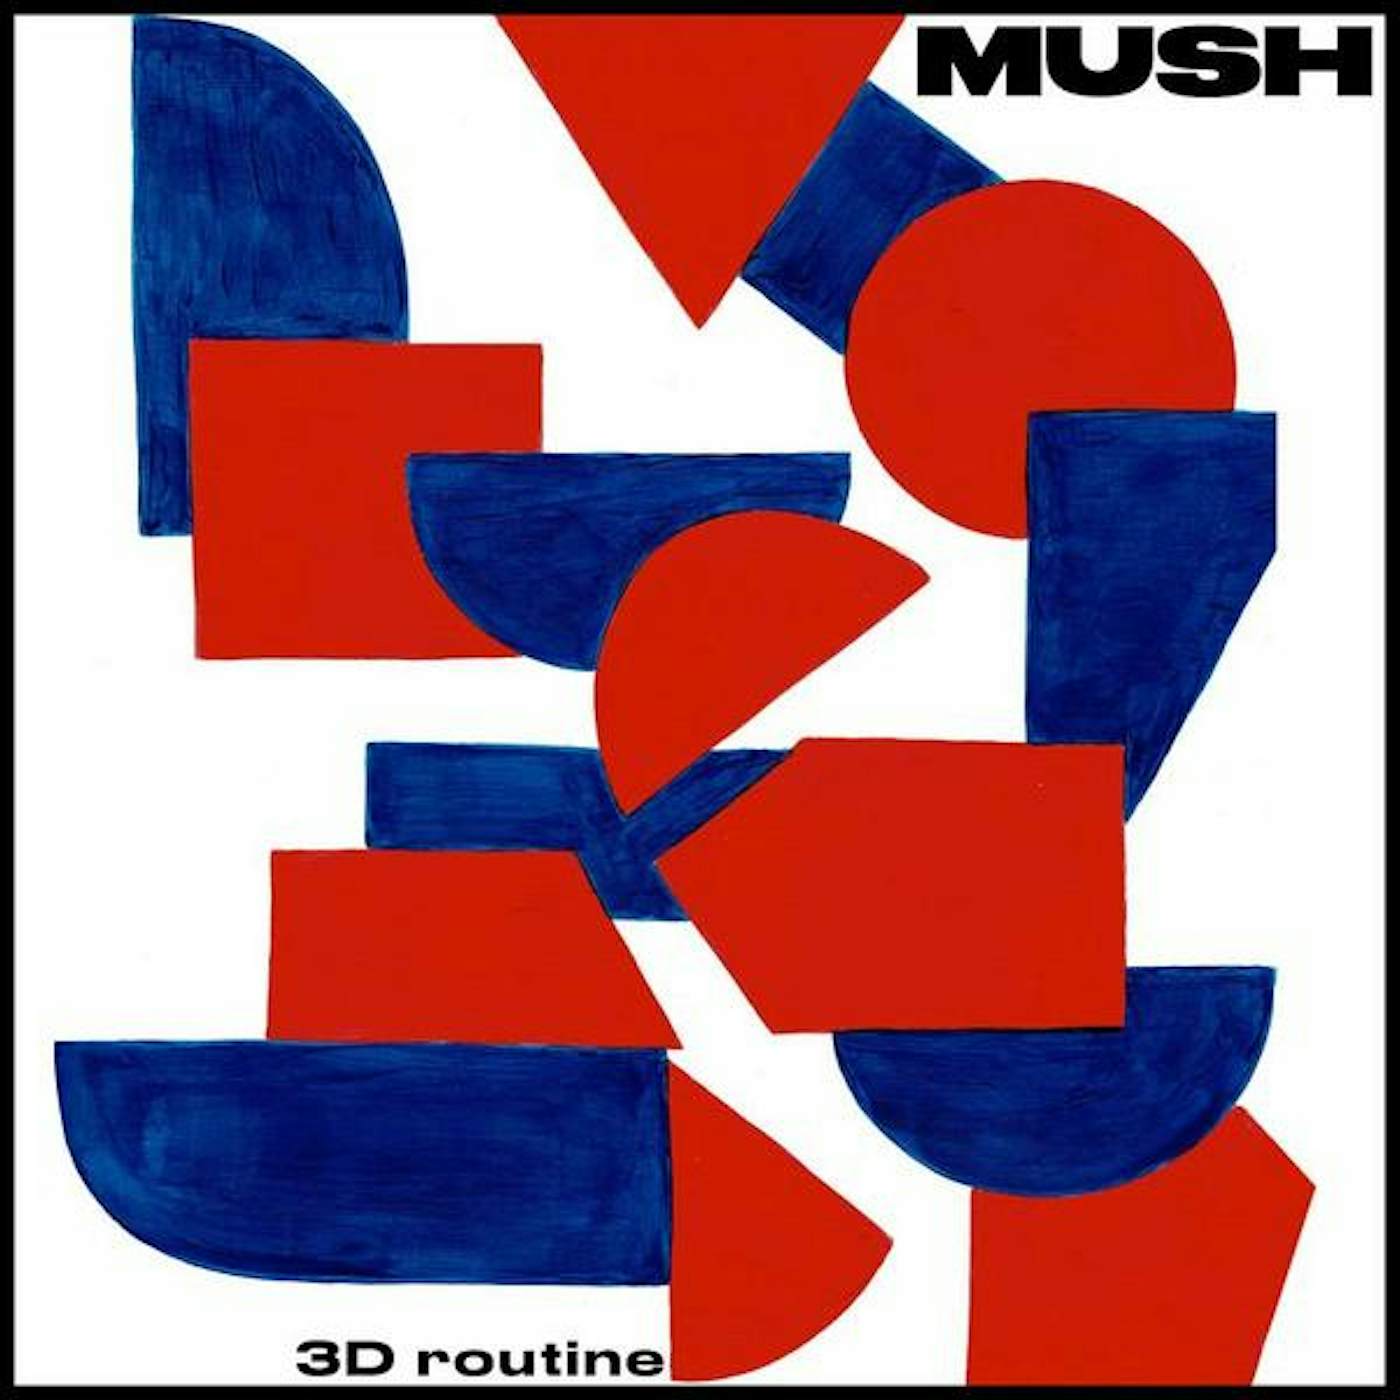 Mush 3D ROUTINE (DL CARD) Vinyl Record